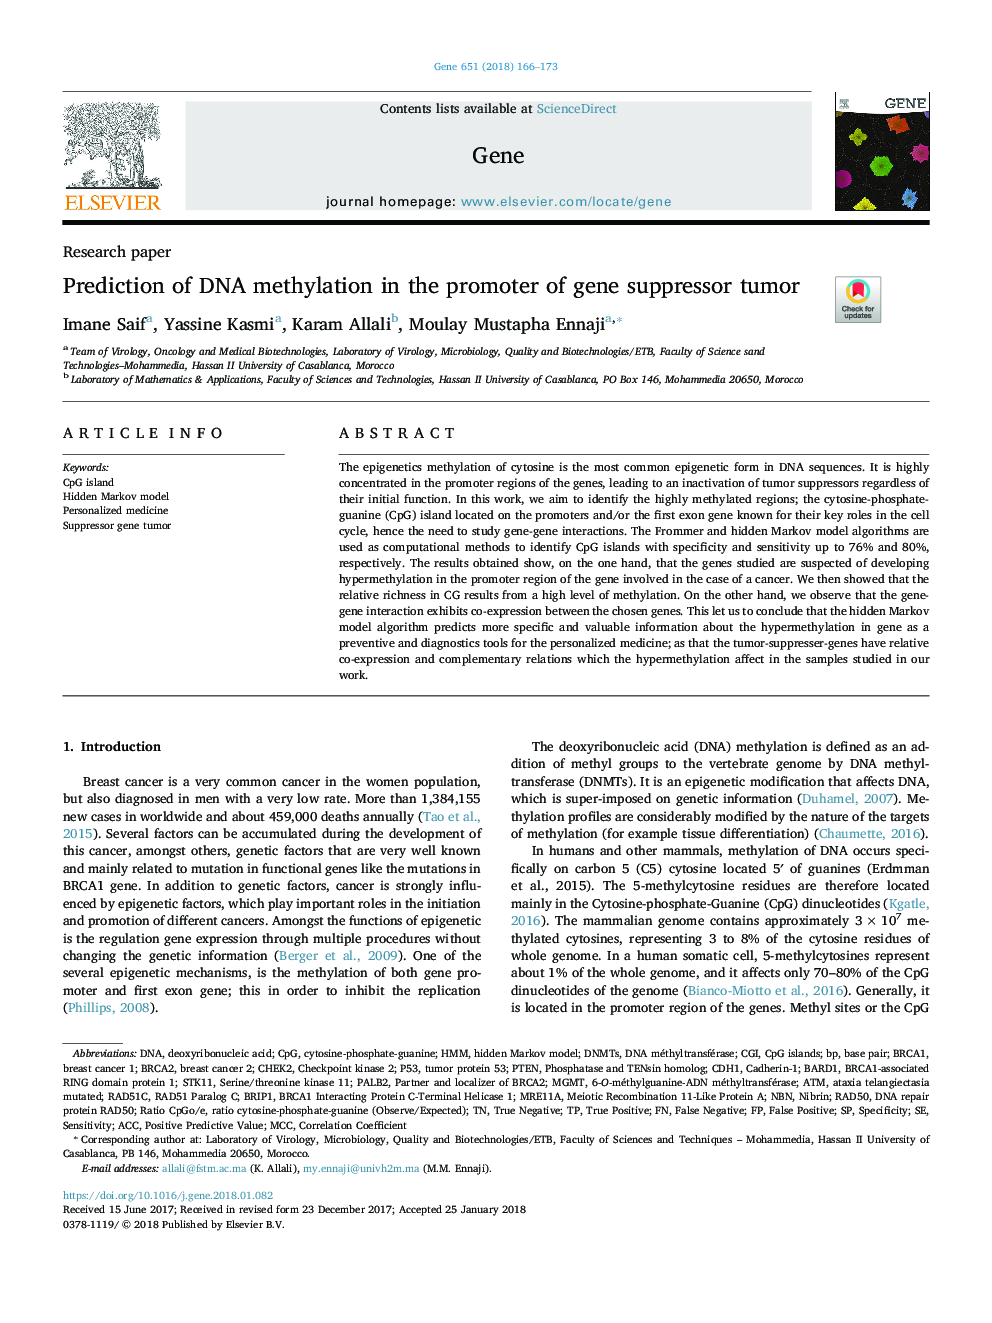 Prediction of DNA methylation in the promoter of gene suppressor tumor